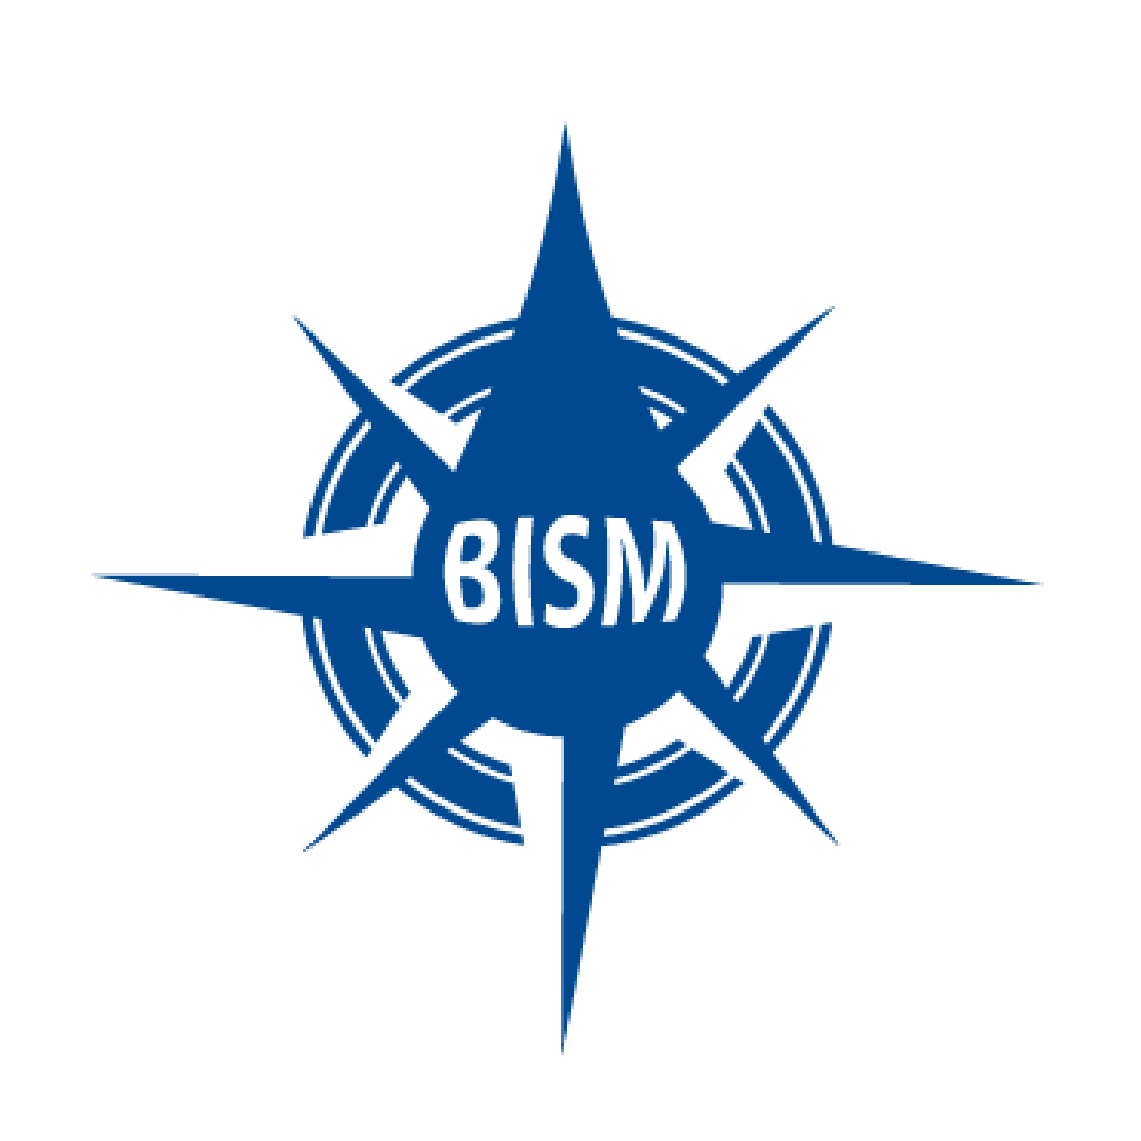 Custom Water Link - BISM Beverage logo - compass with water droplet